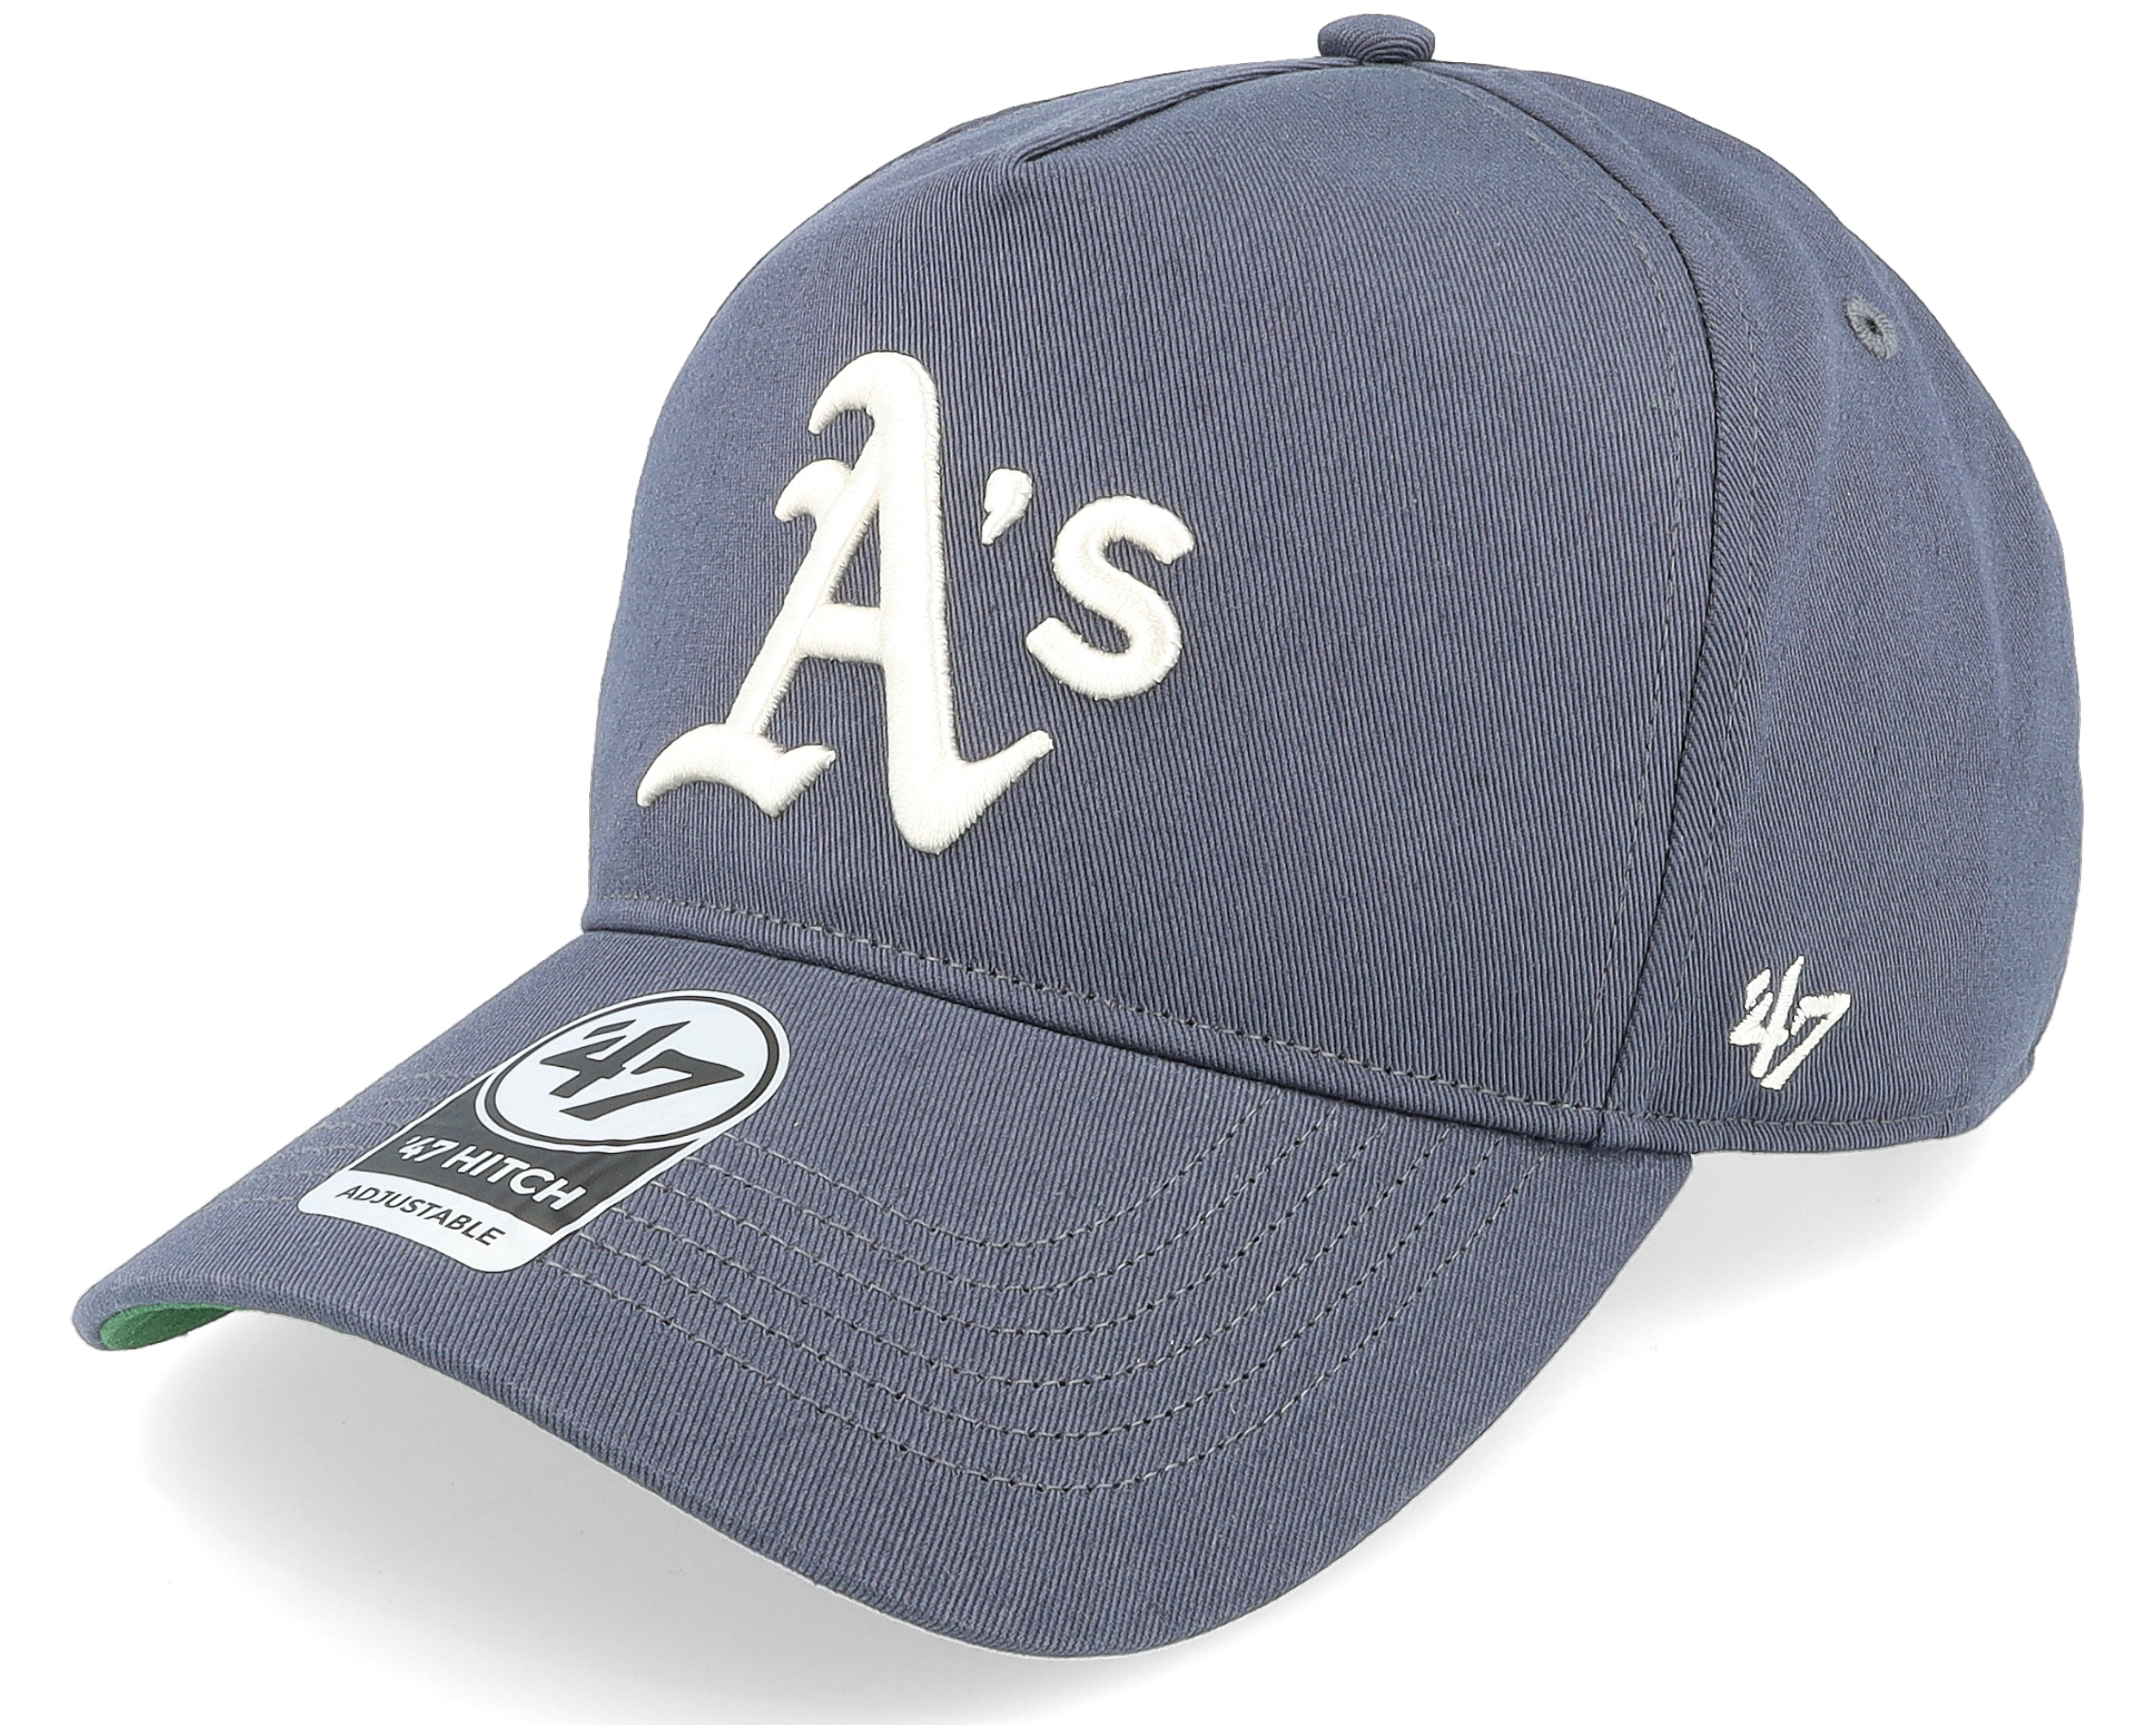 Oakland Athletics Men's 47 Brand One Size Hat